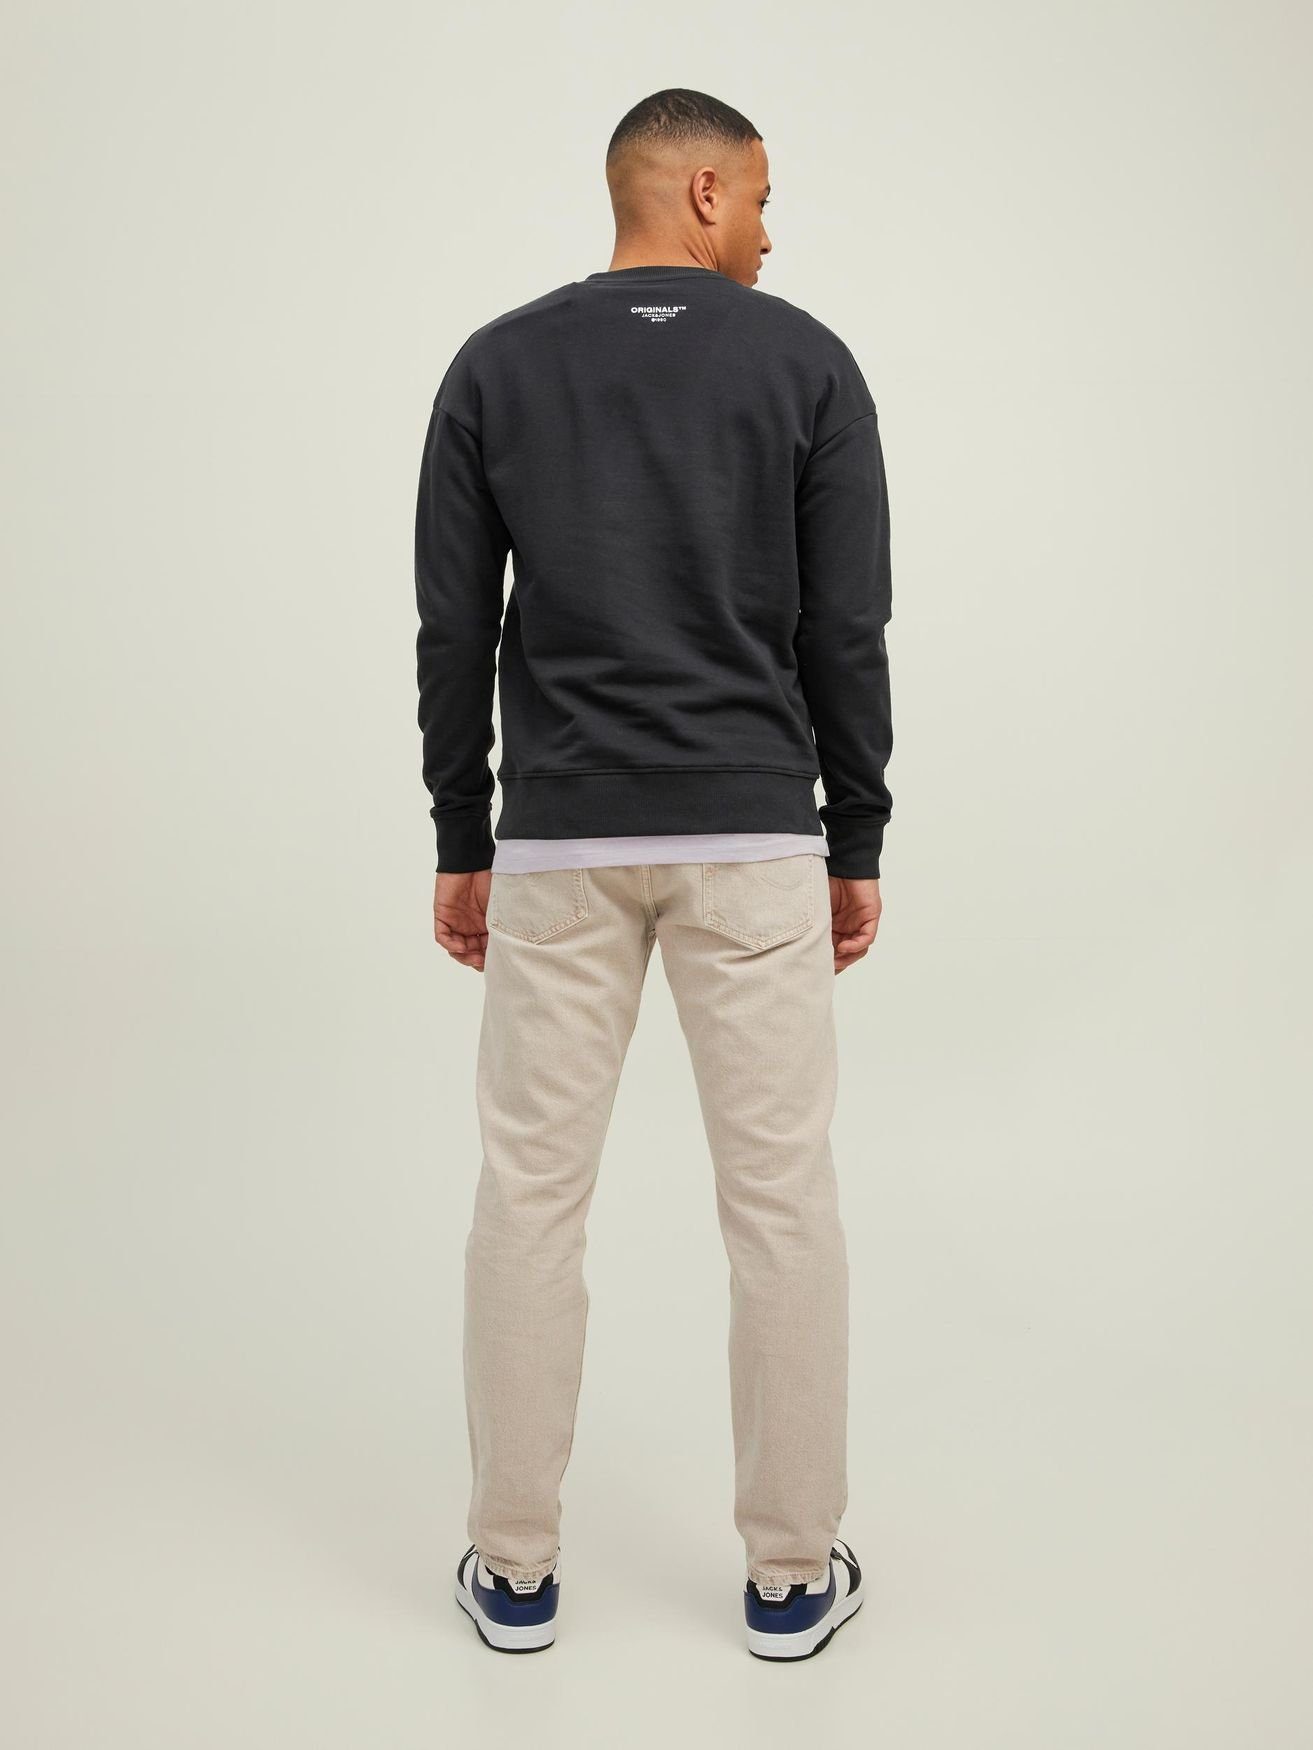 Jack & Jones Sweatshirt Shirt Sweater Pullover Langarm JORCLEAN Rundhals Schwarz-2 Basic 4672 in